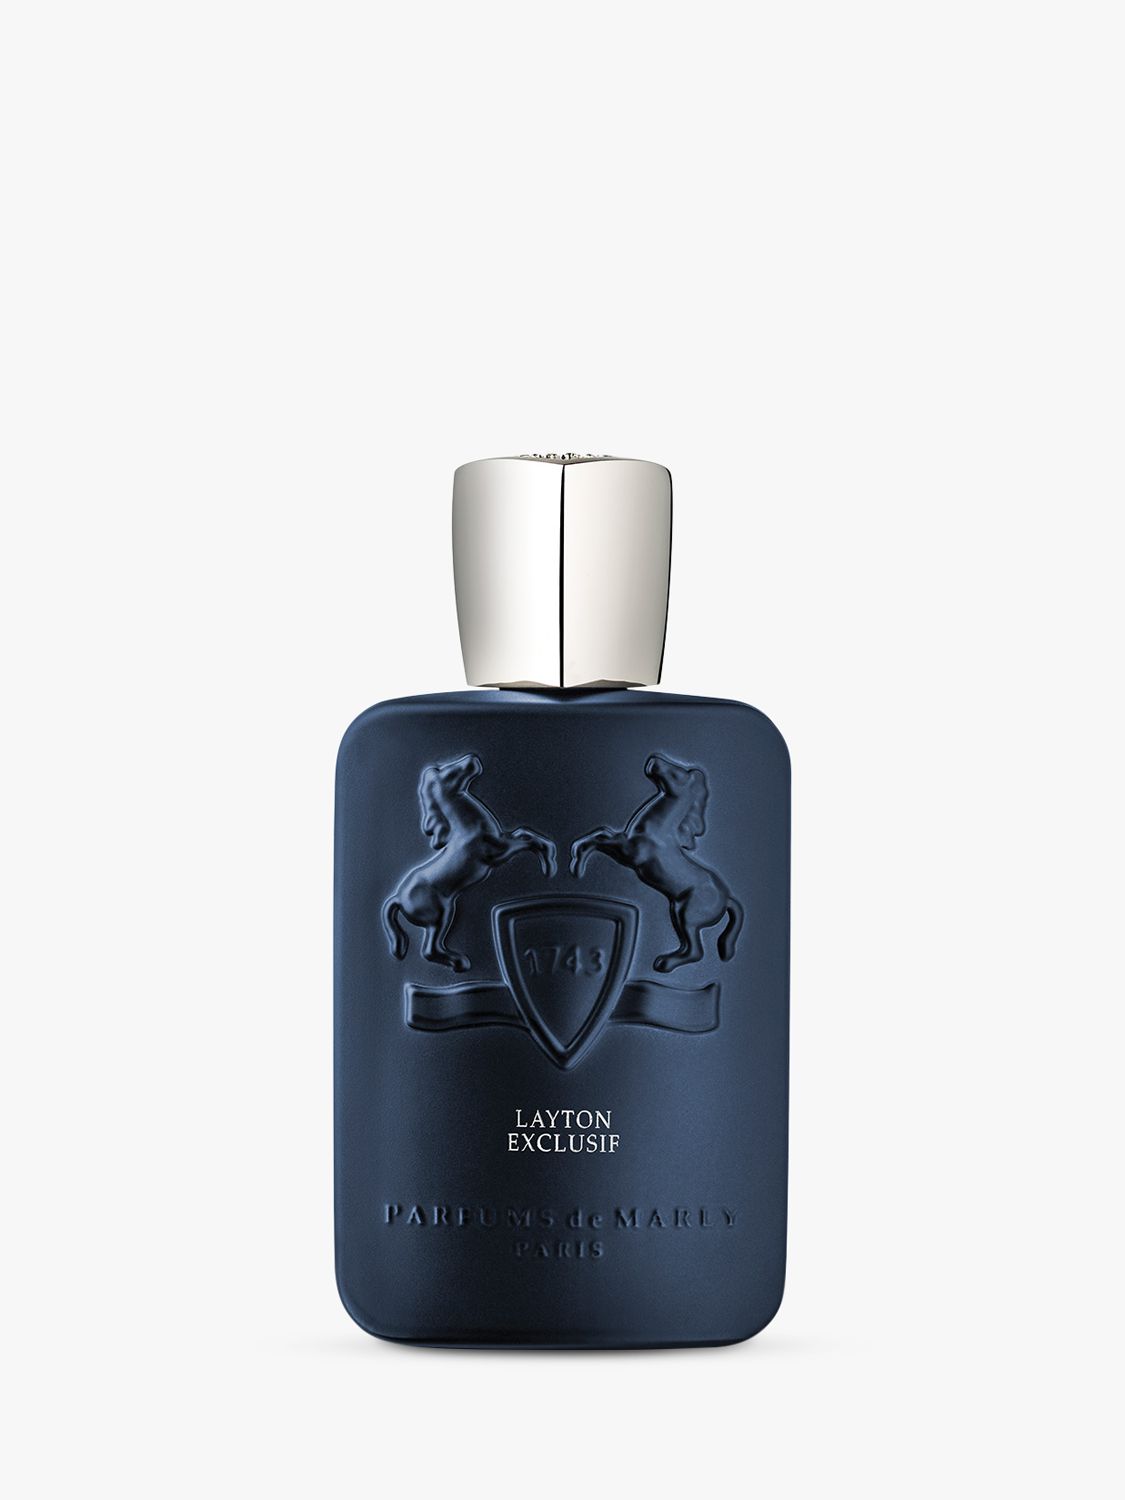 Parfums de Marly Layton Exclusif Eau de Parfum, 125ml